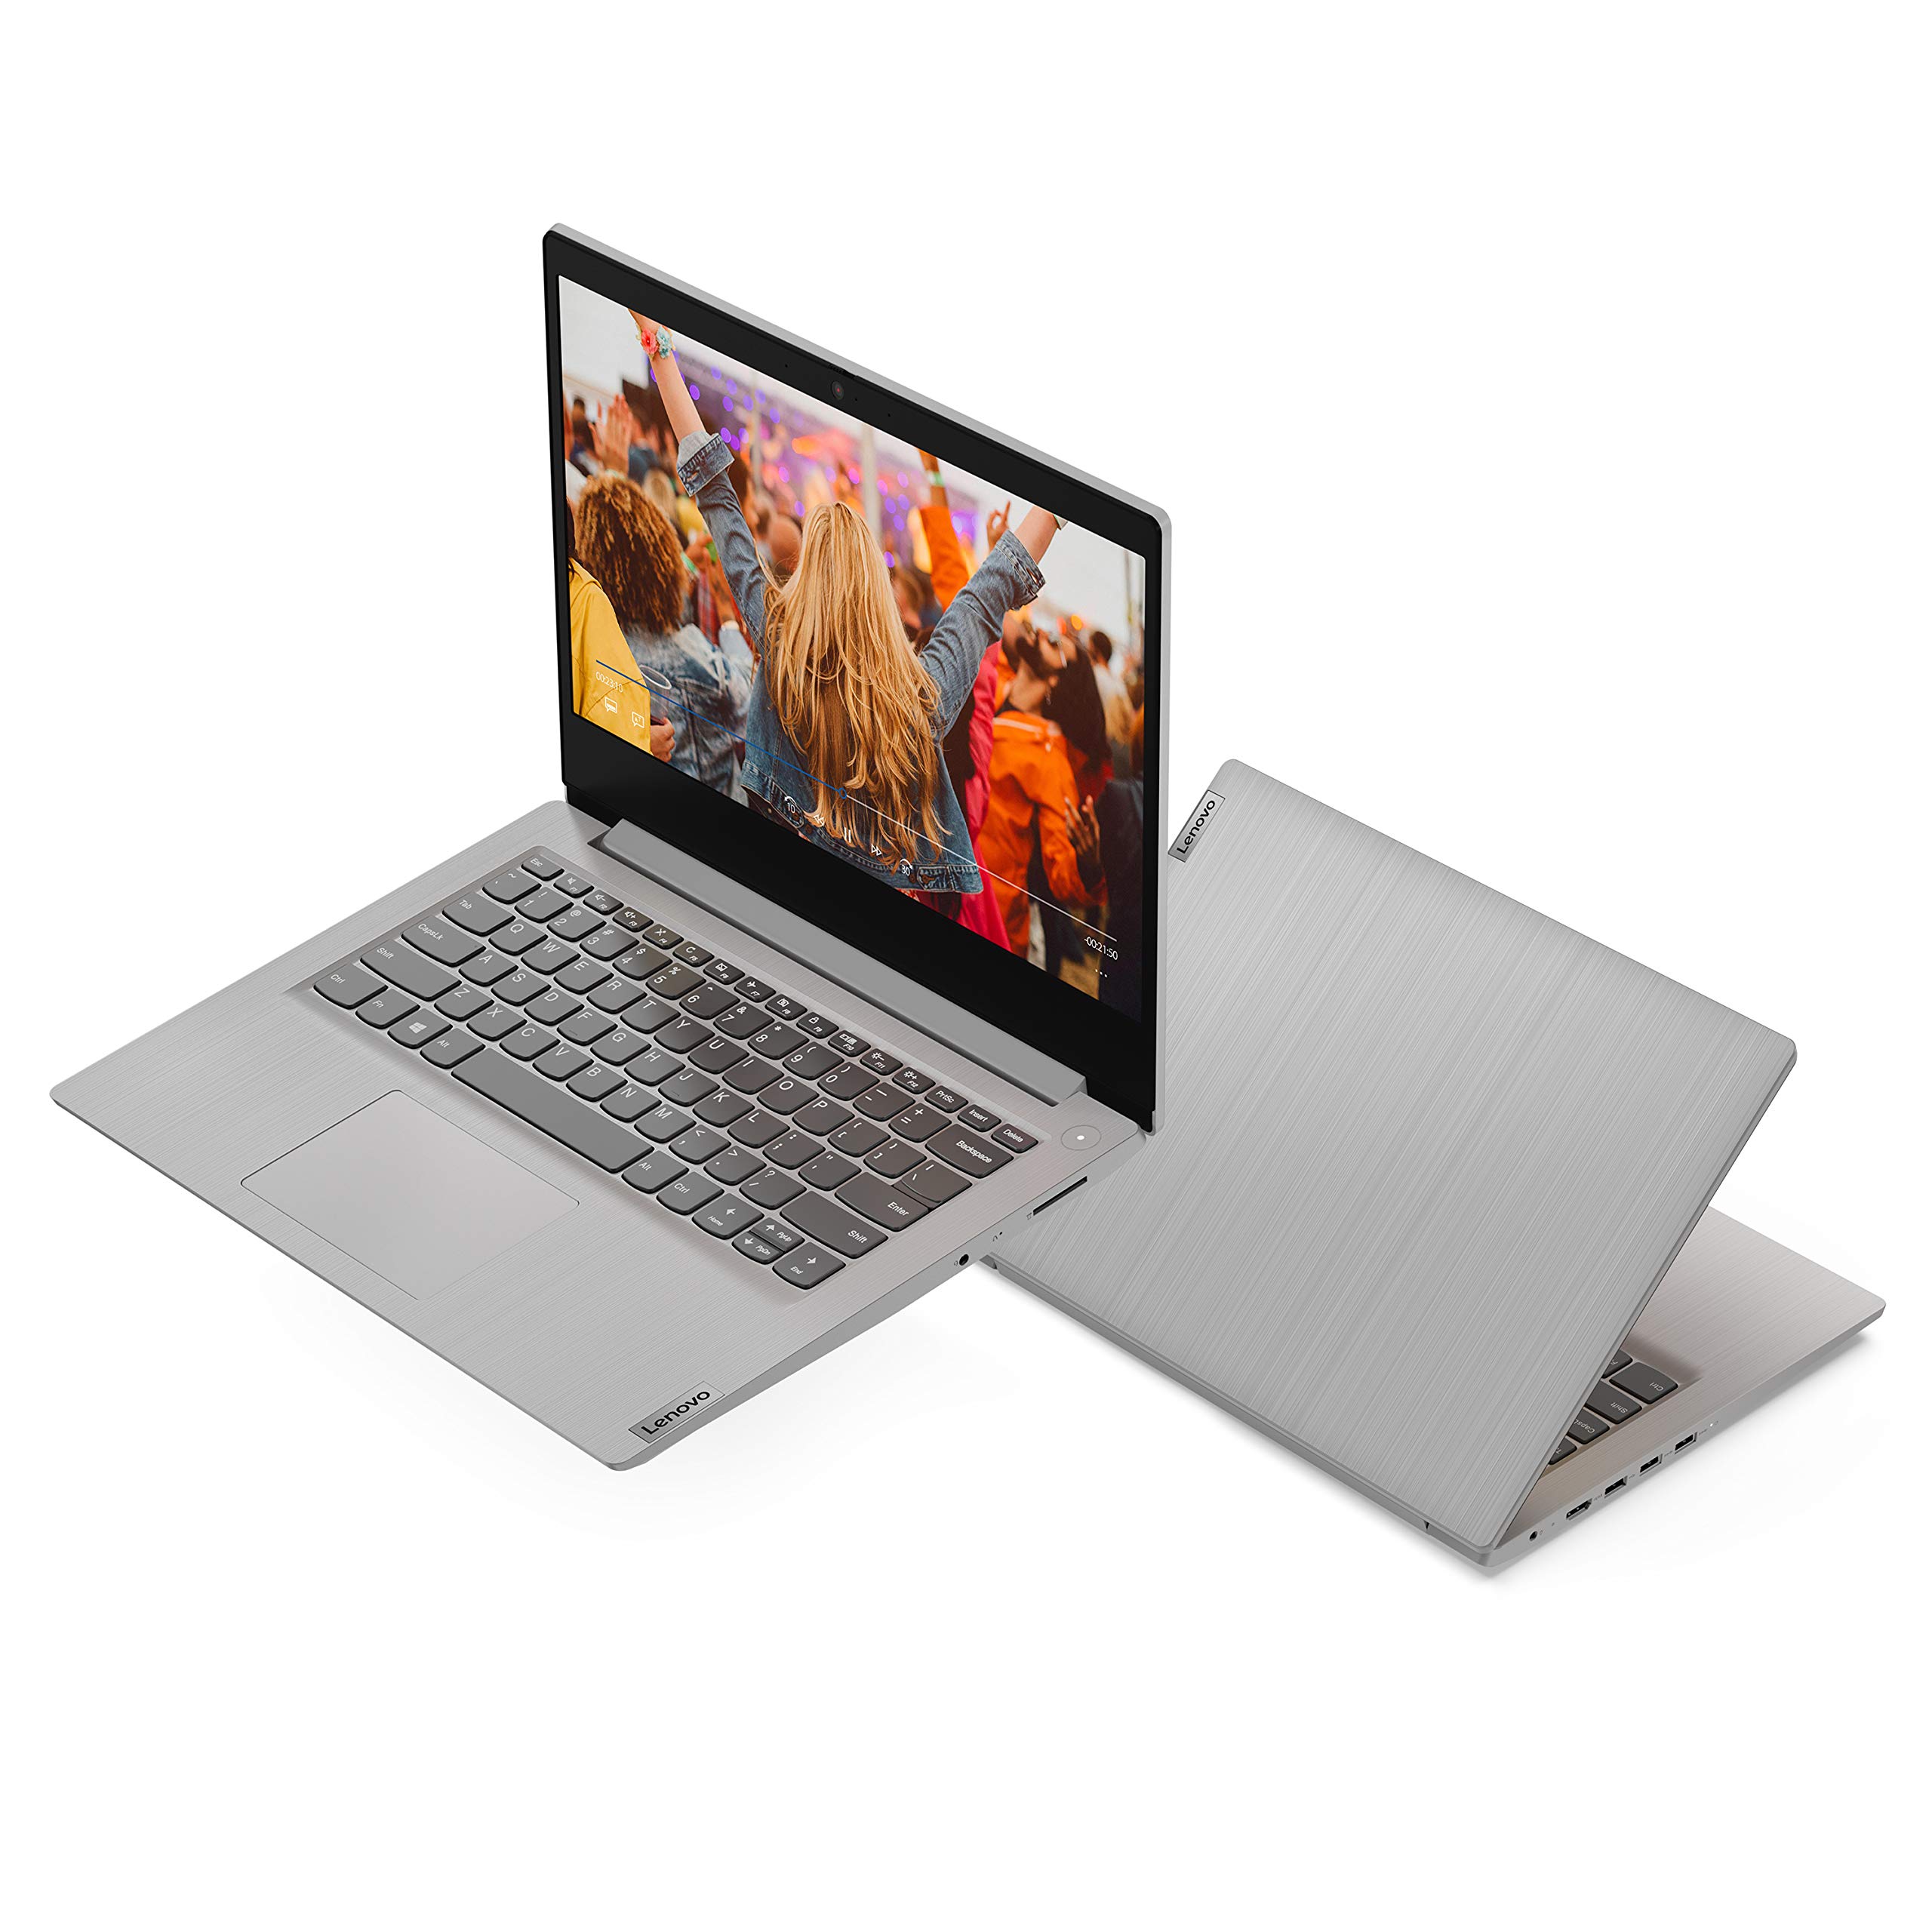 Lenovo IdeaPad 3 14 Laptop, Intel Core i3-1005G1, 4GB RAM, 128GB Storage, 14.0